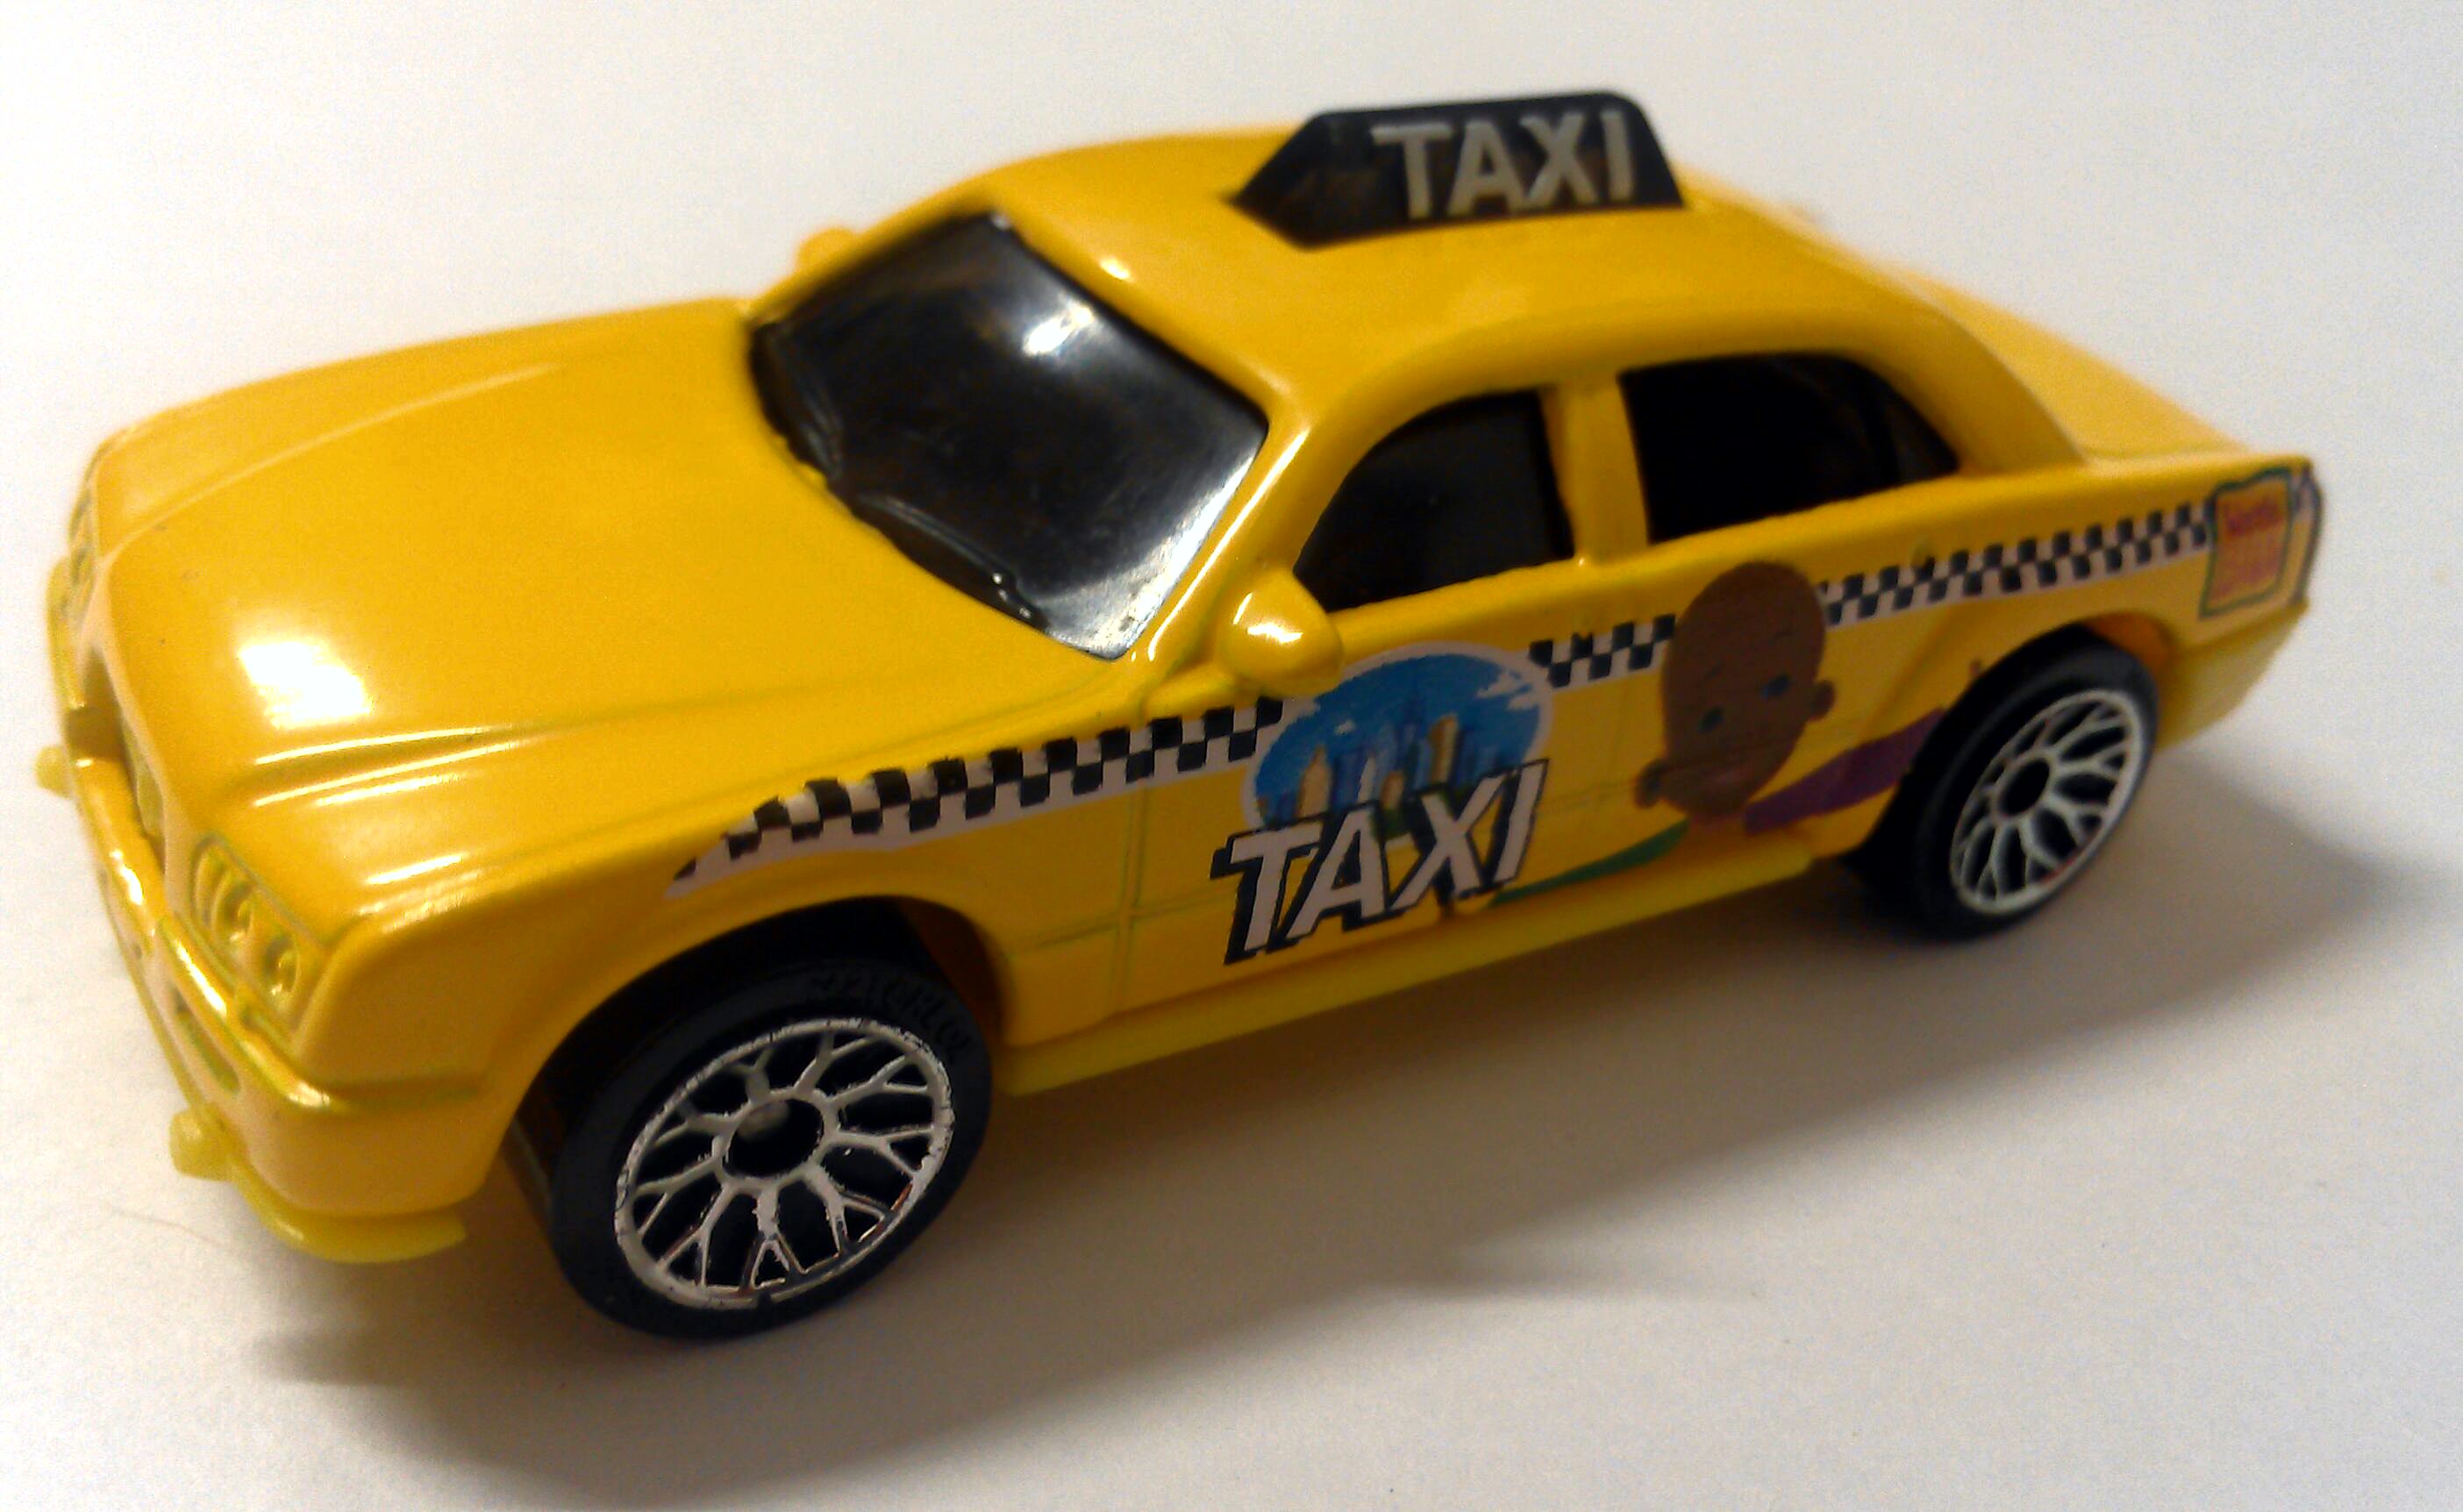 Taxi Cab - Matchbox Cars Wiki2808 x 1724